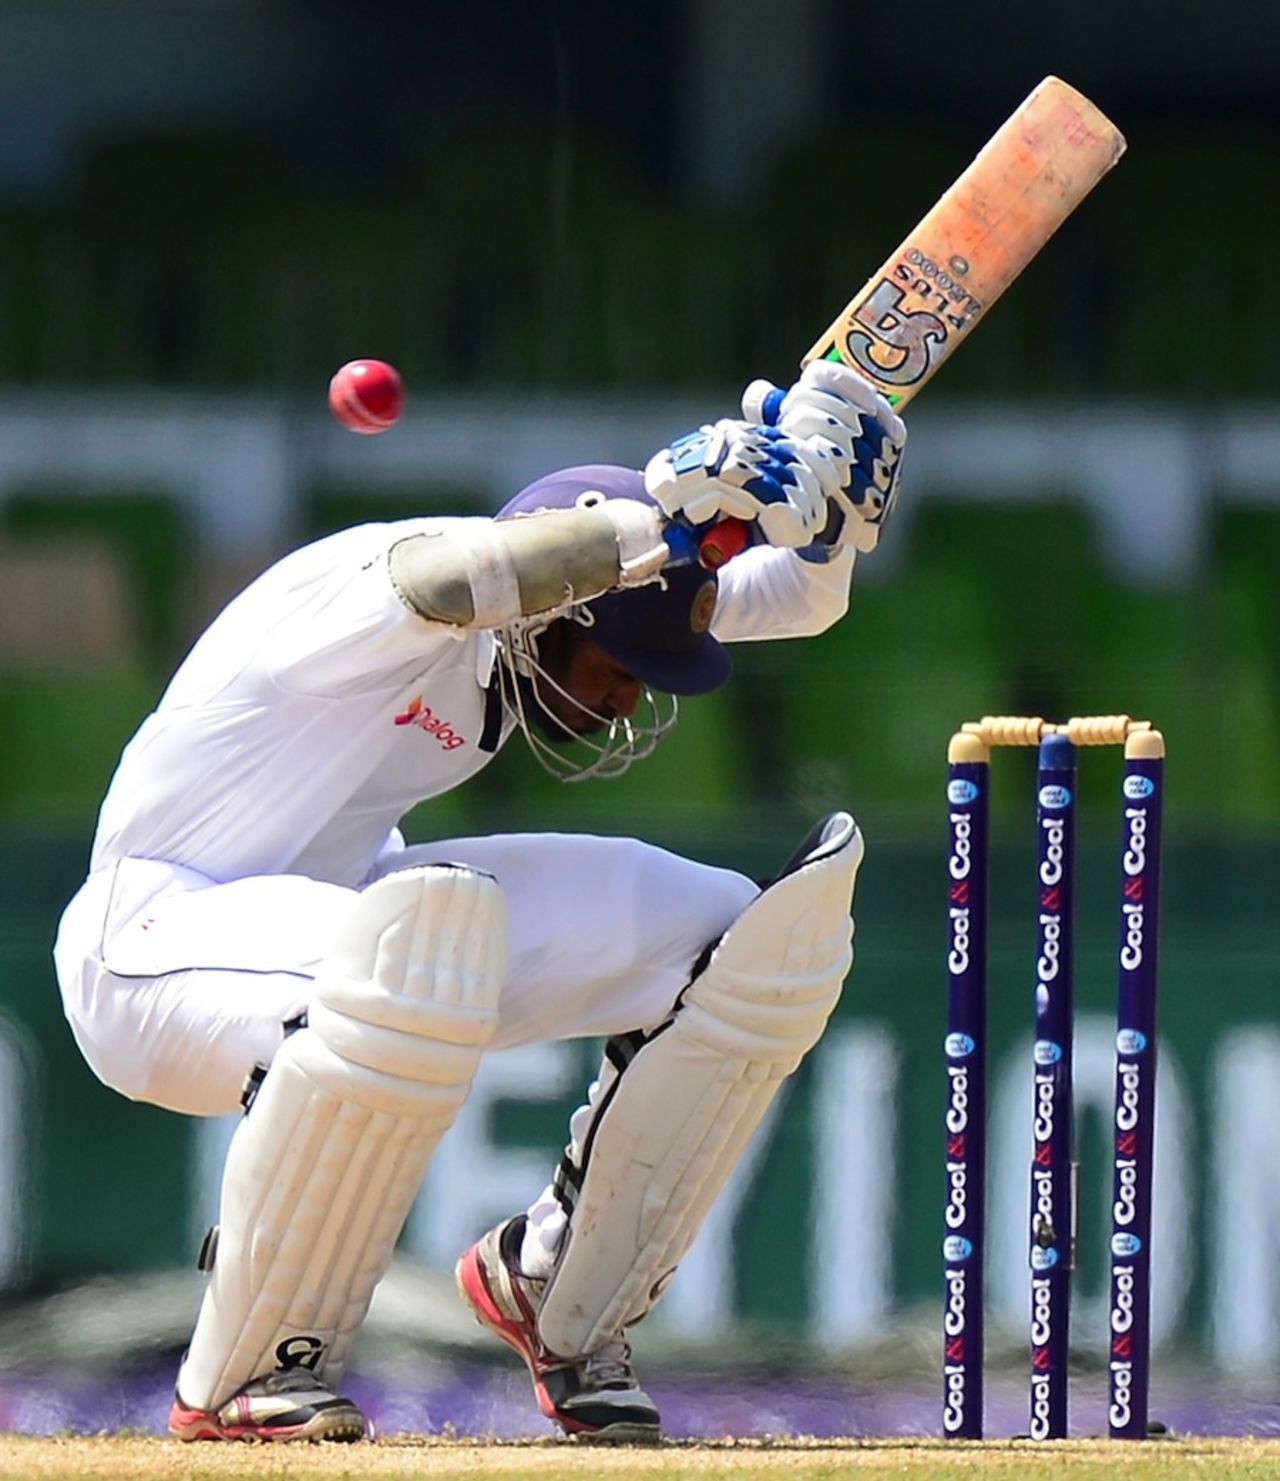 Upul Tharanga ducks under a bouncer, Sri Lanka v Pakistan, 2nd Test, Colombo, 1st day, August 14, 2014